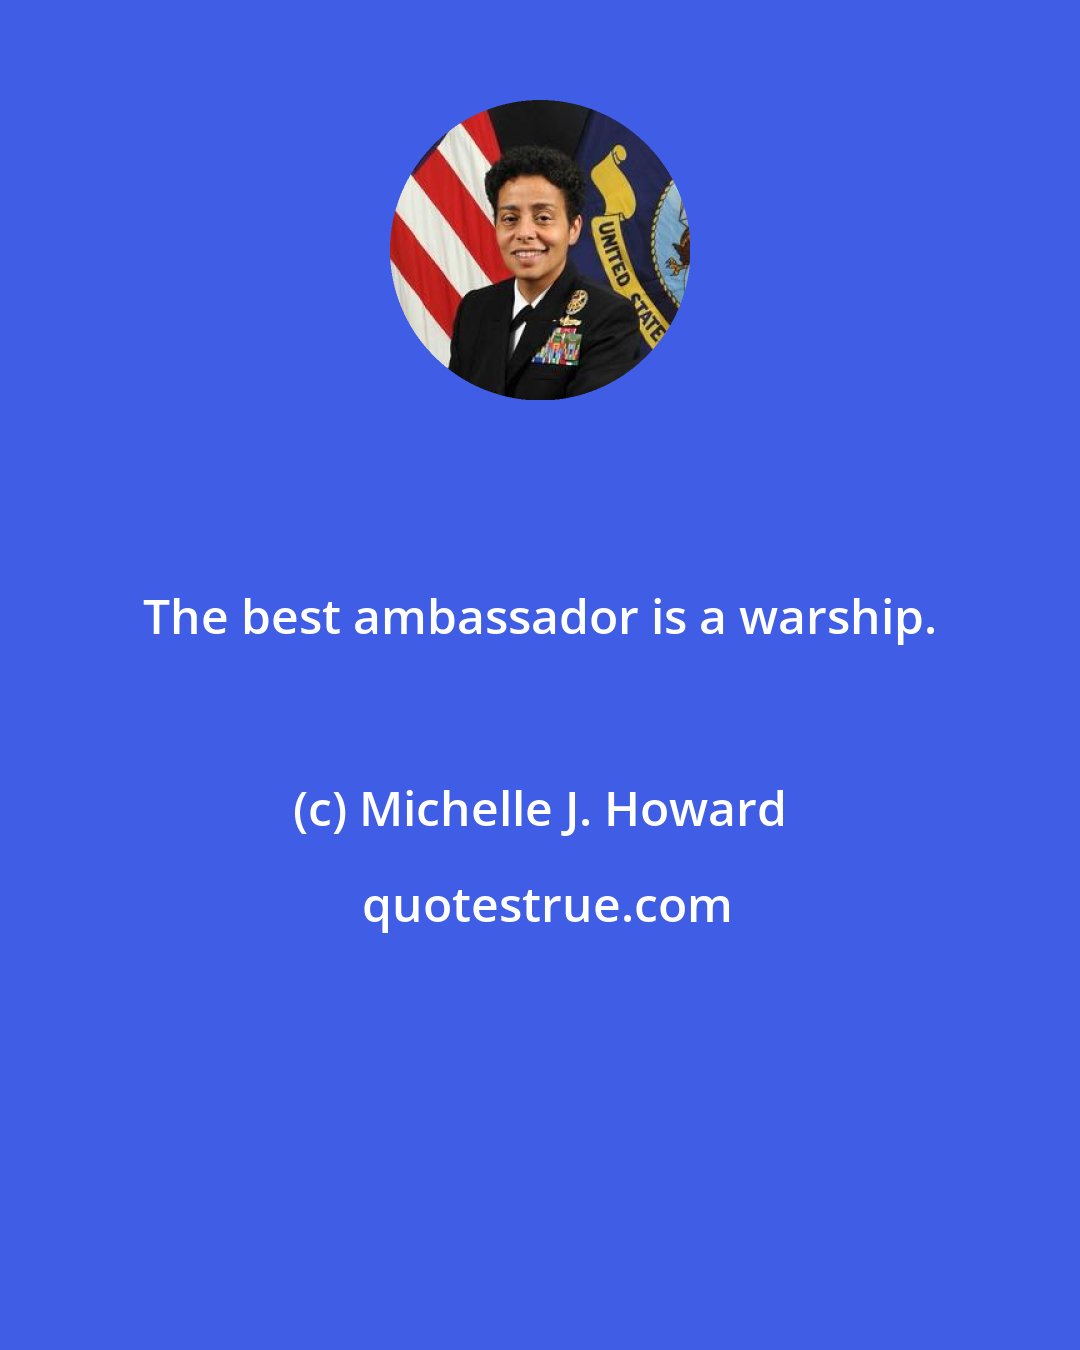 Michelle J. Howard: The best ambassador is a warship.